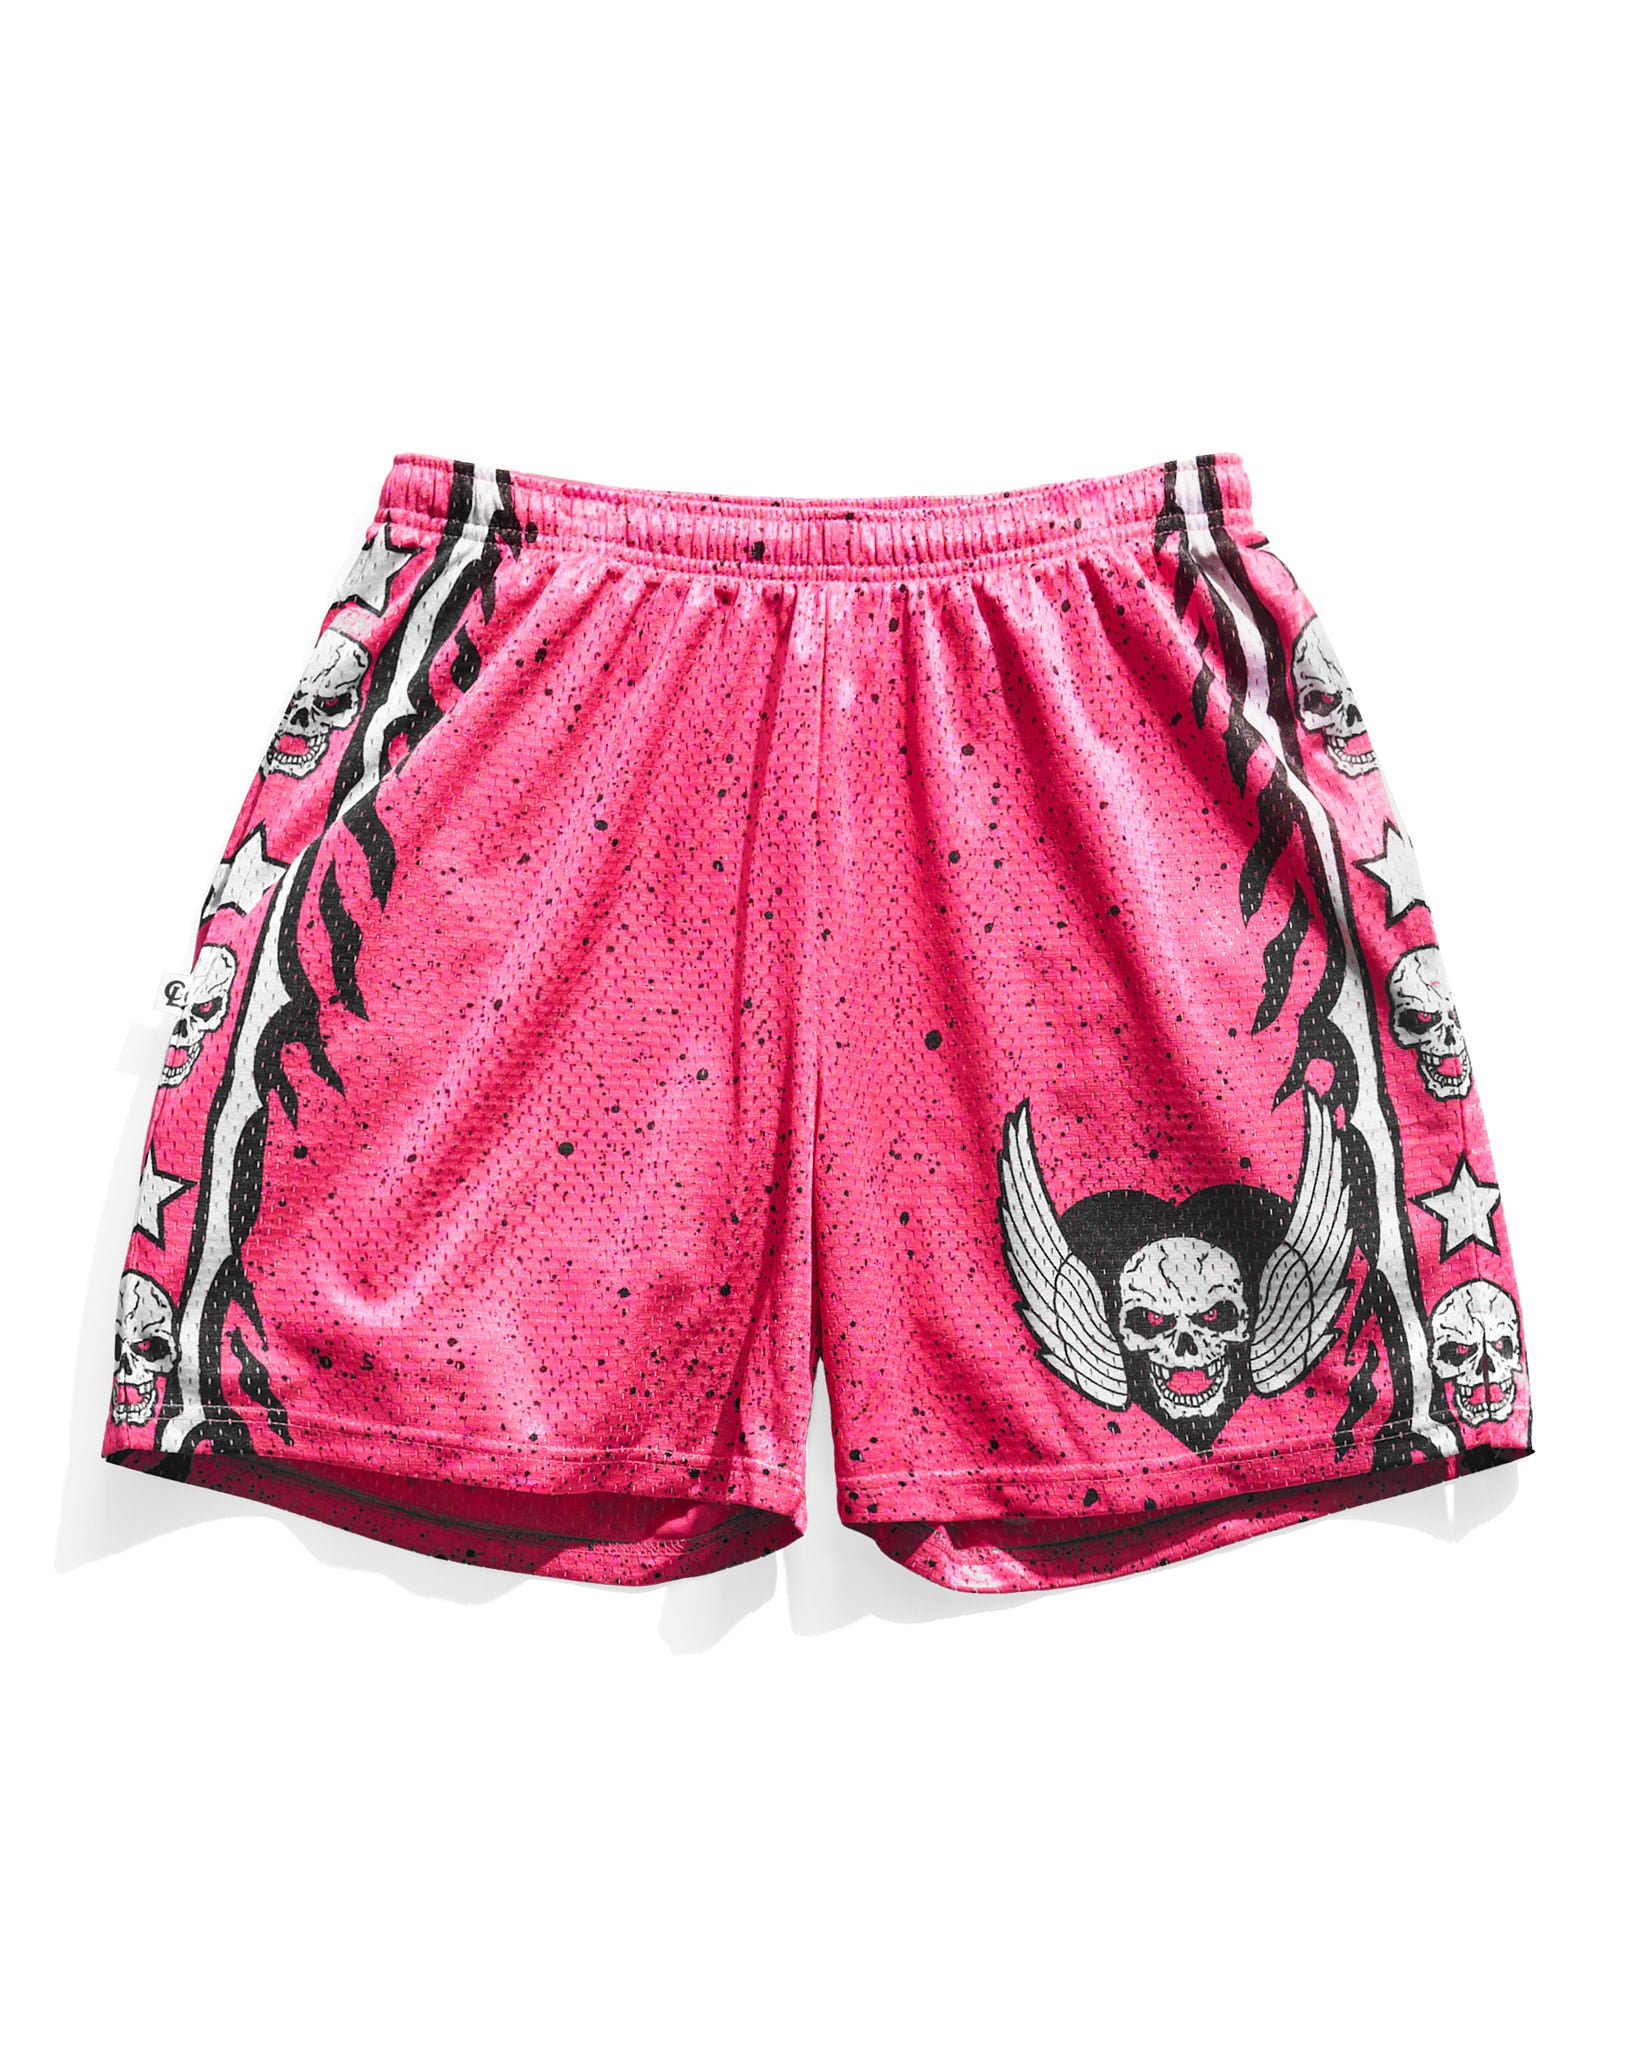 Bret Hart Speckle Pink Retro Shorts